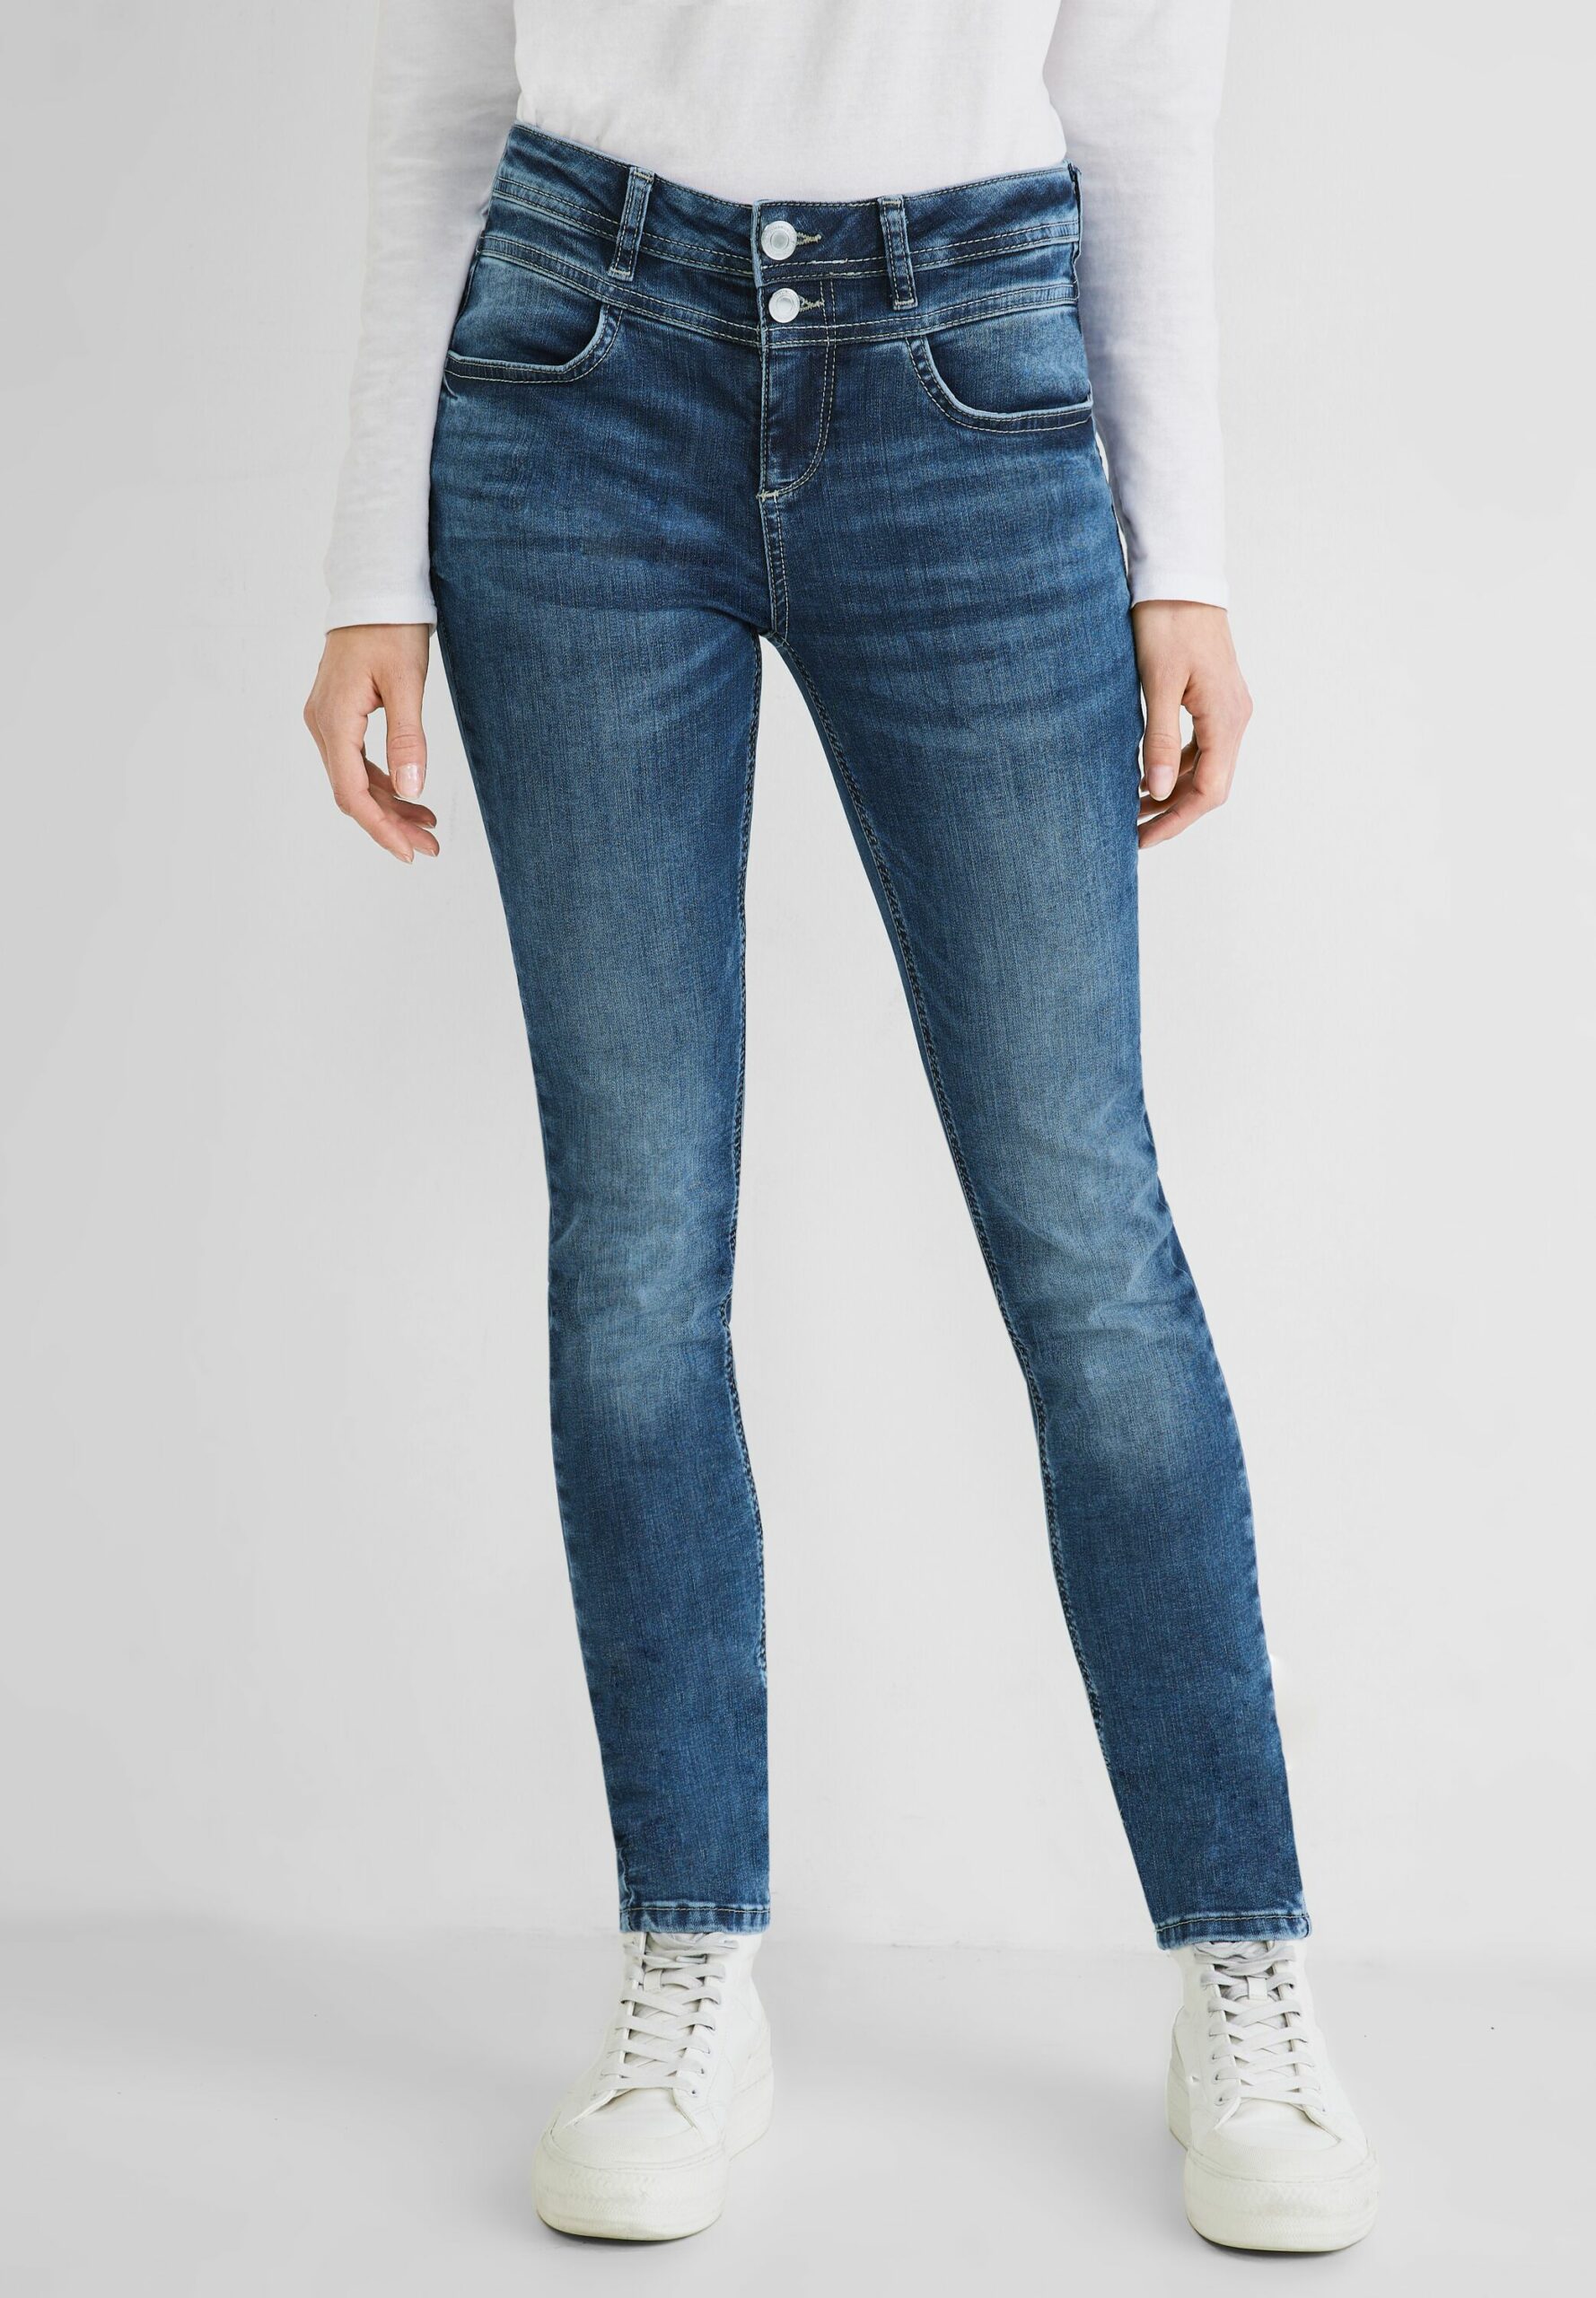 One Street Fit Jeans Slim Horsthemke -